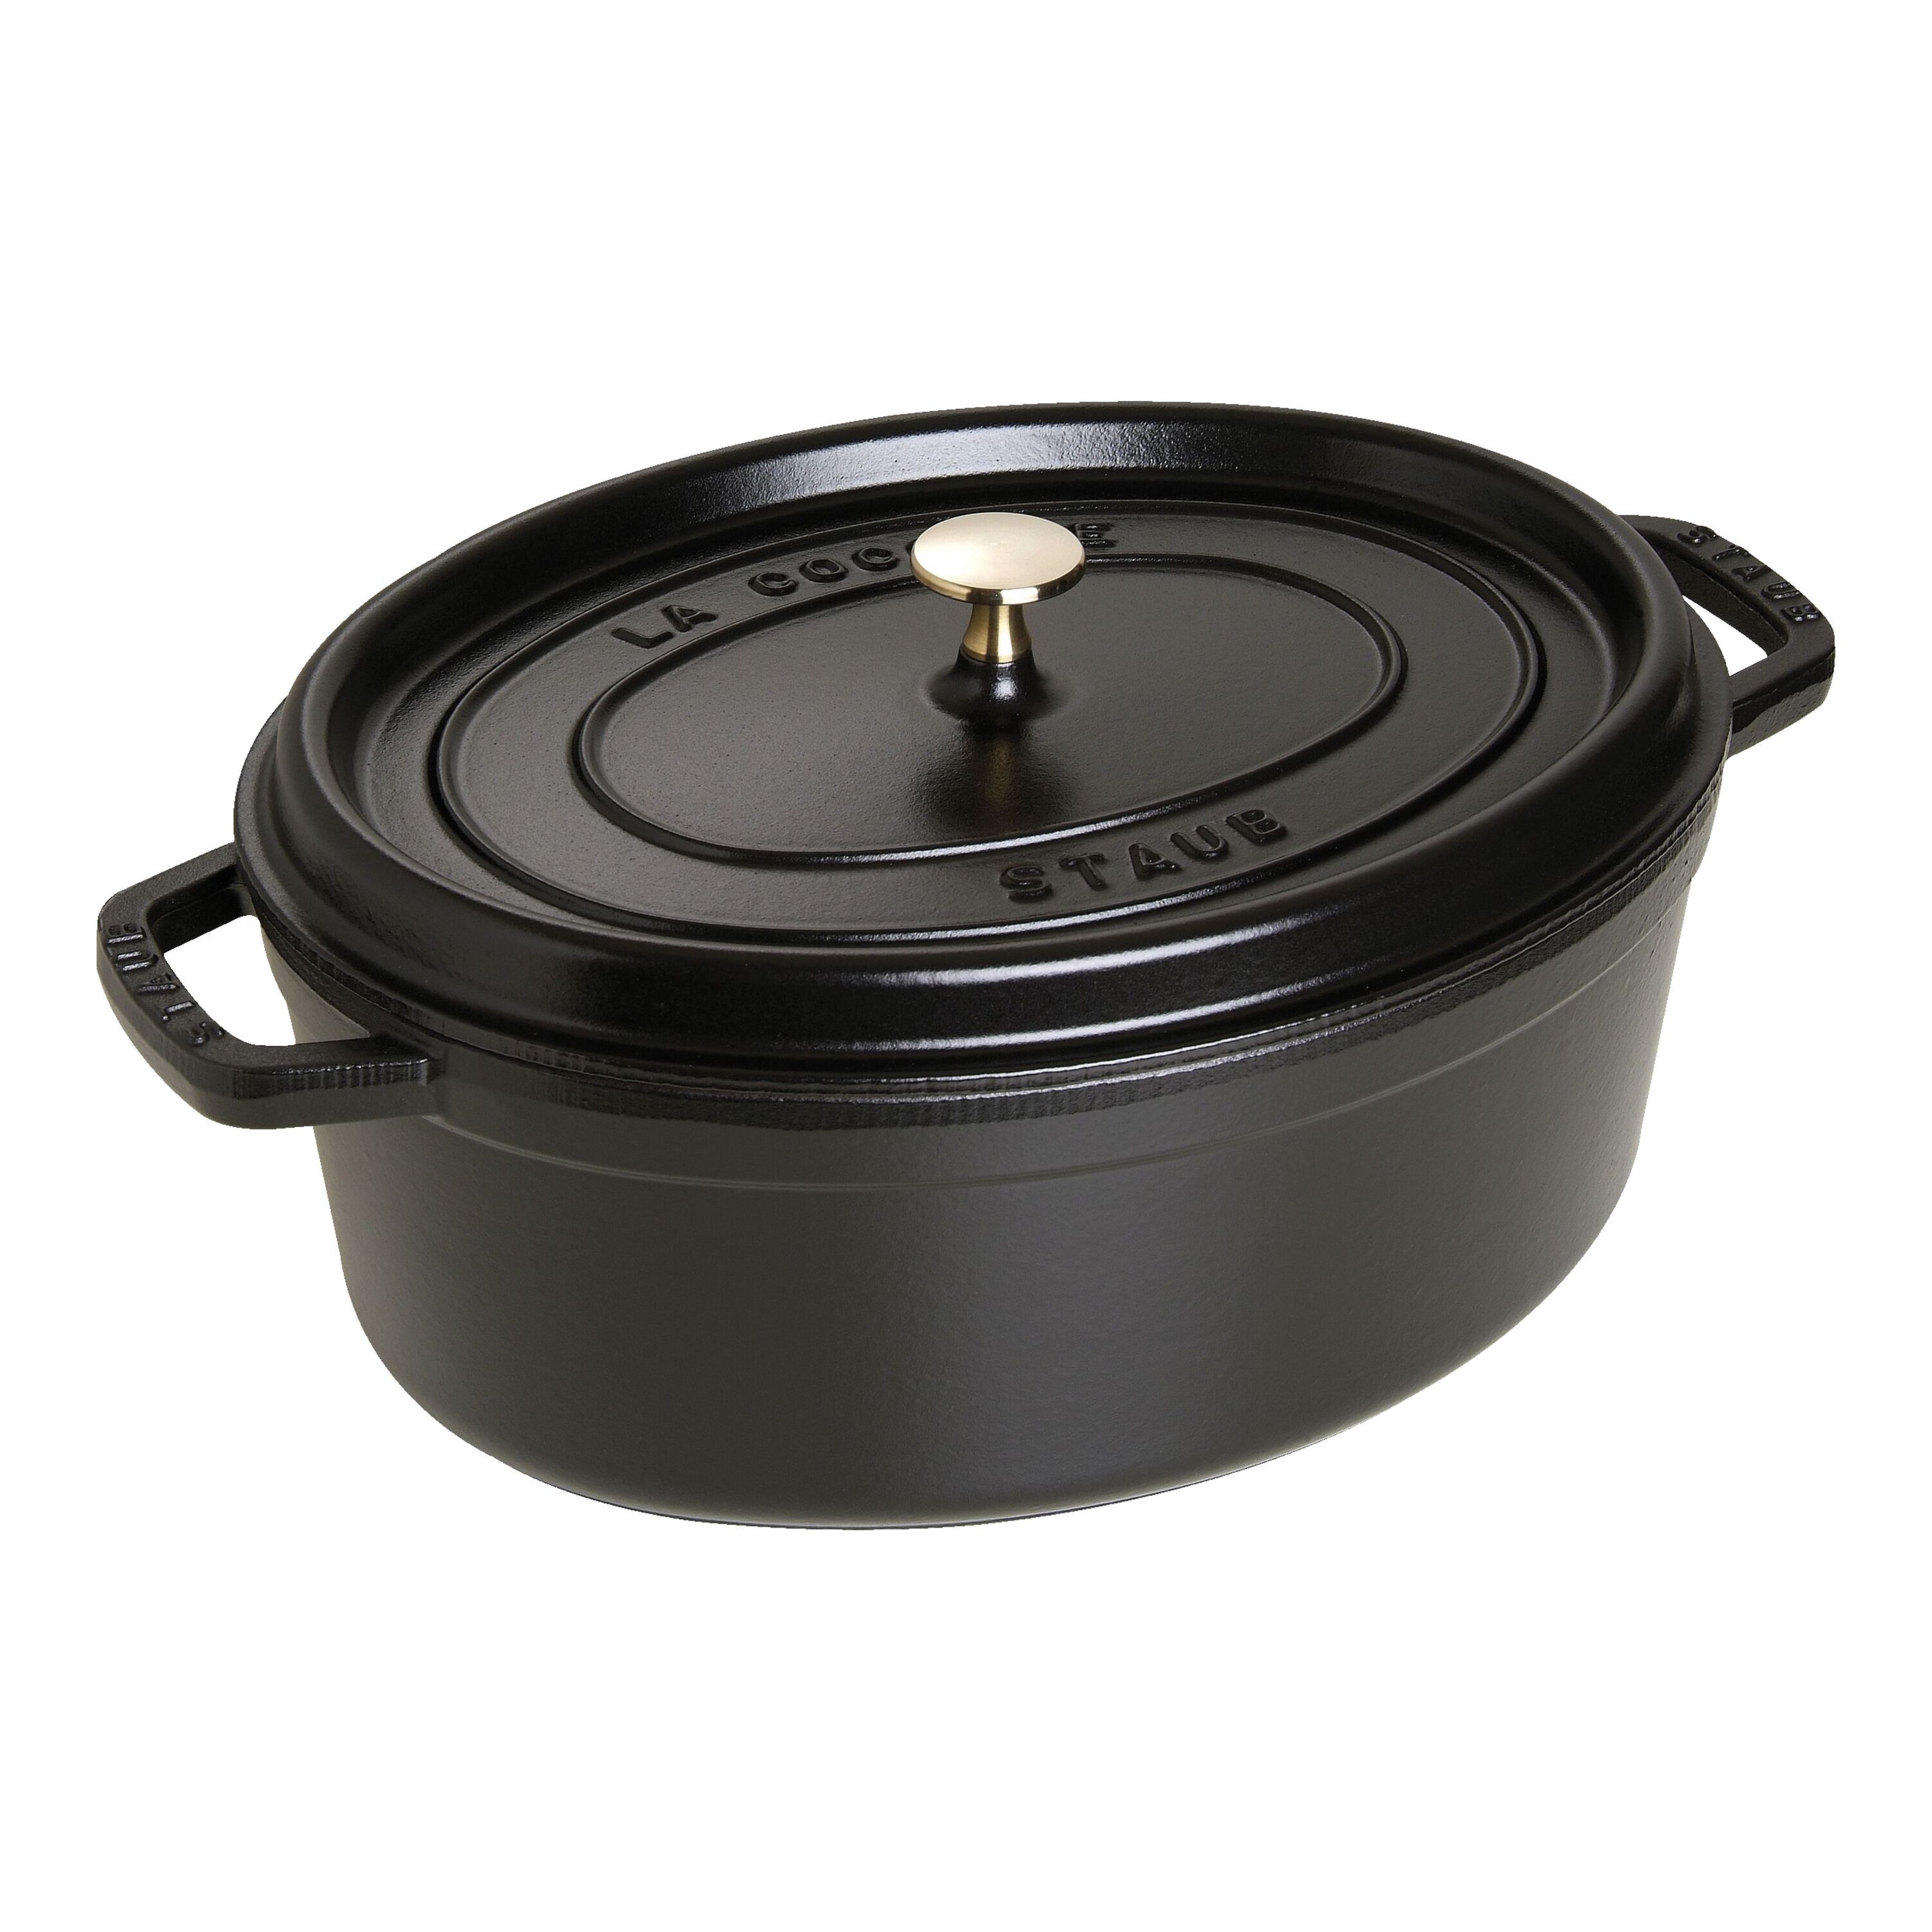 Crock Pot Artisan 7-Quart Oval Dutch Oven - Gray, 7 qt - Fry's